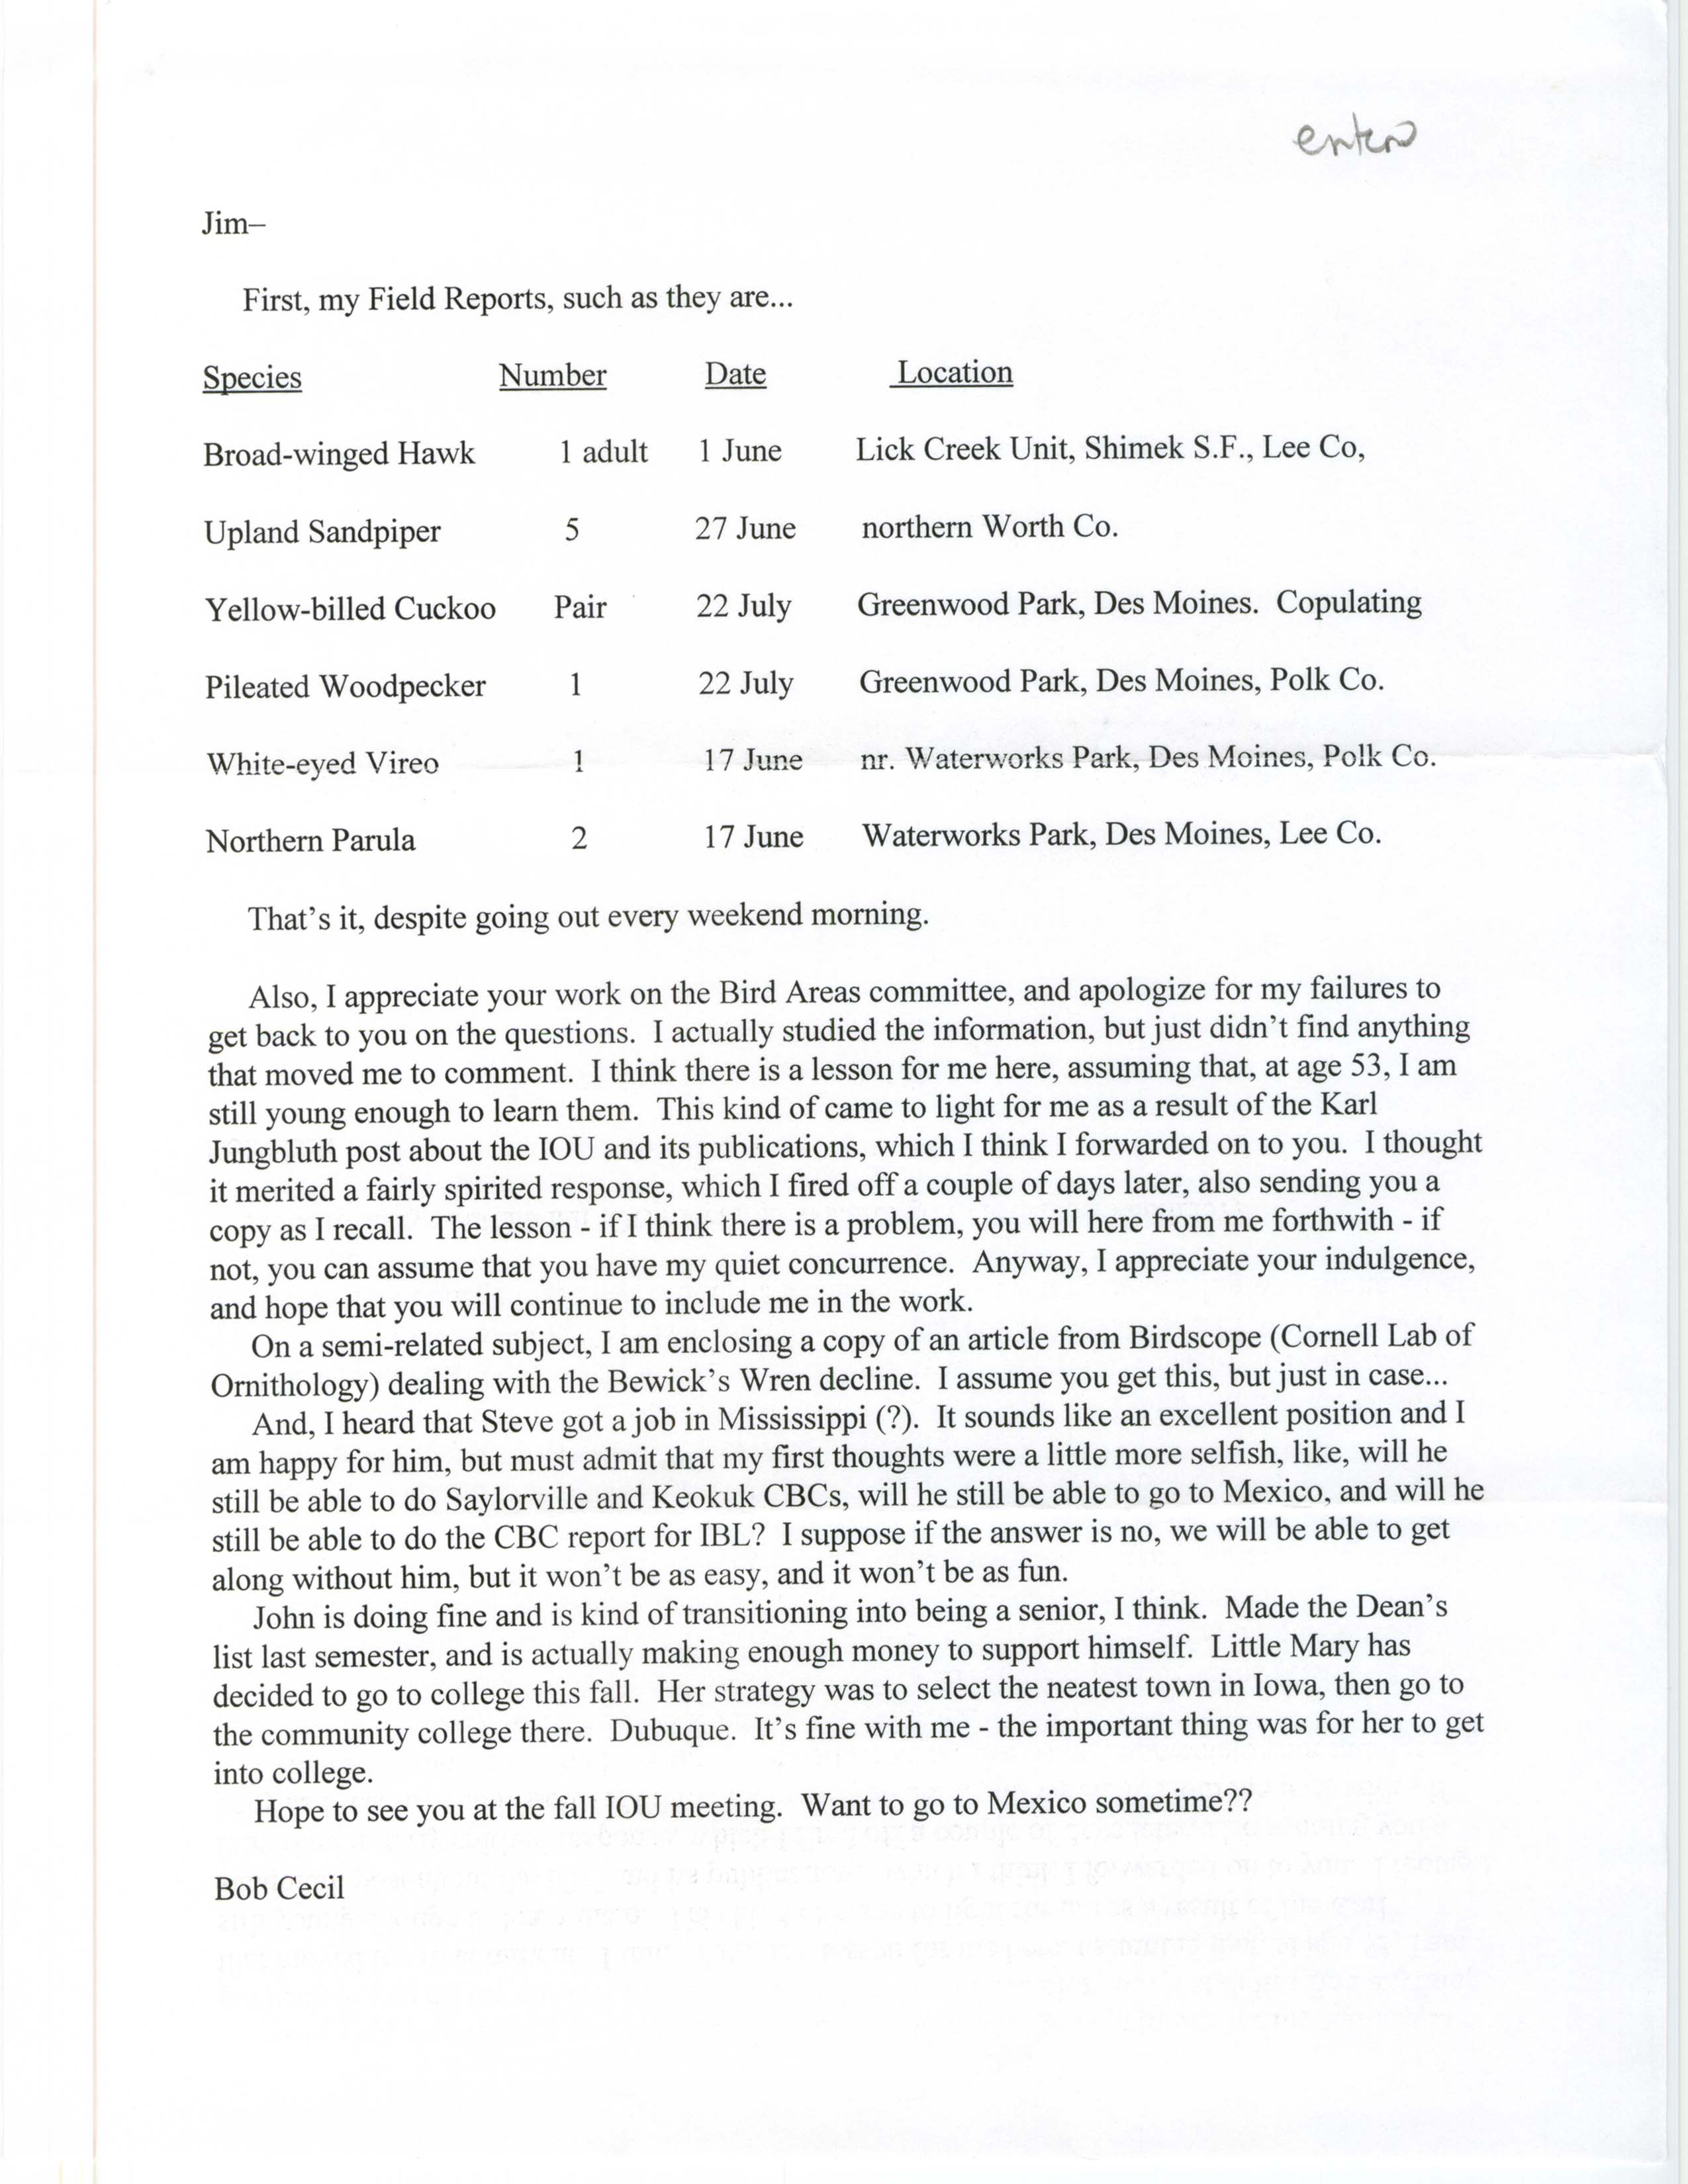 Robert I. Cecil letter to James J. Dinsmore regarding bird sightings, summer 2001